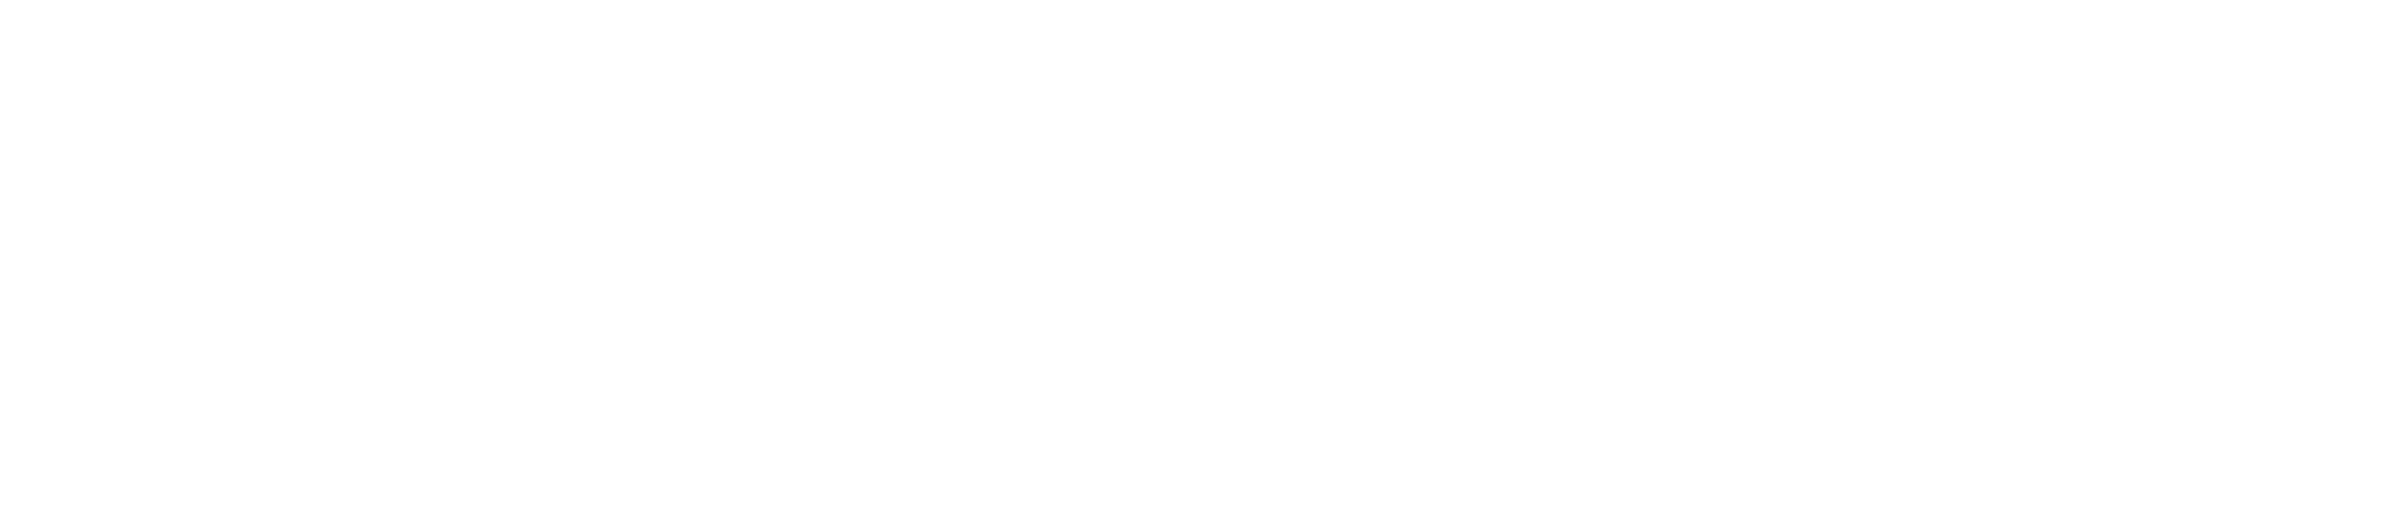 Fermilab Logo - Fermilab | Graphics Standards at Fermilab | Logo and usage